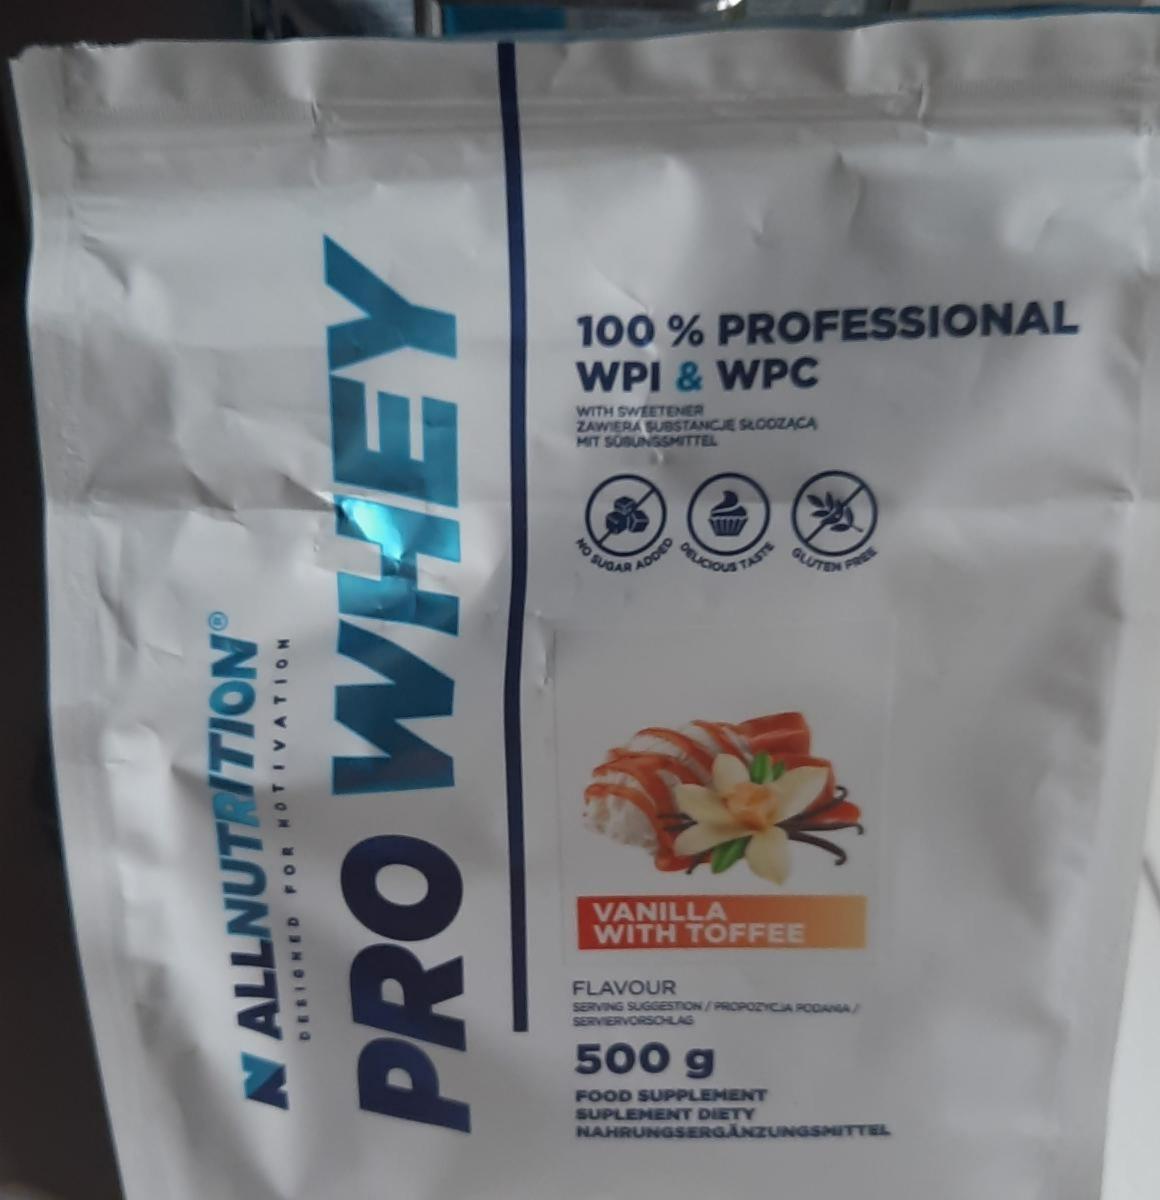 Fotografie - Pro Whey 100% Professional WPI & WPC Vanilla with toffee Allnutrition